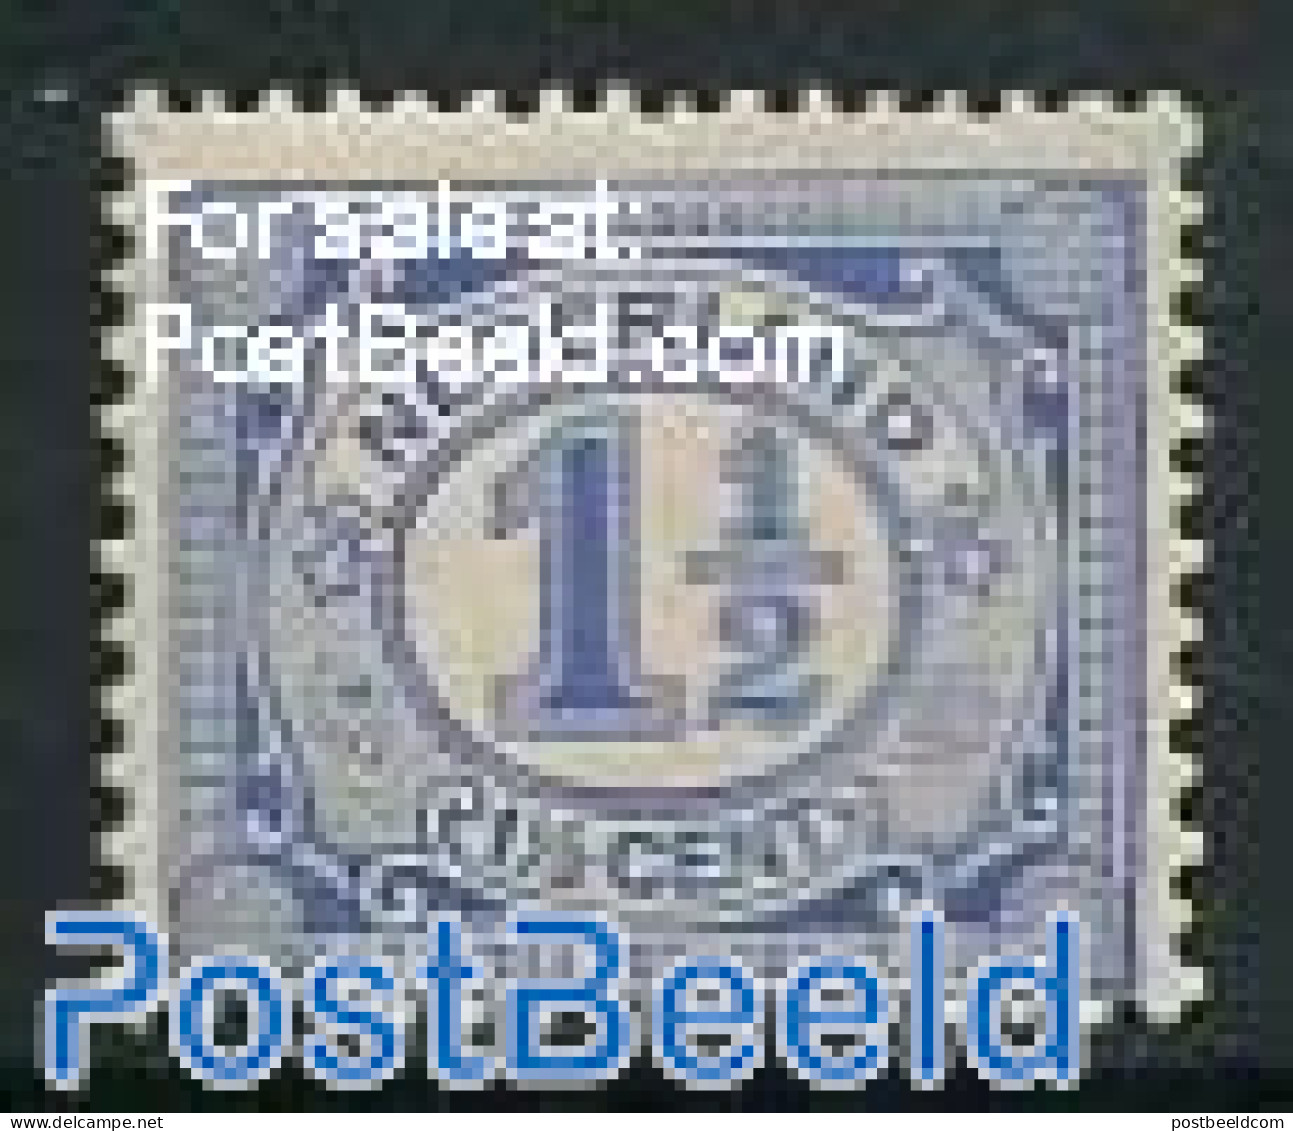 Netherlands 1899 1.5c, Ultramarin, Stamp Out Of Set, Unused (hinged) - Ungebraucht